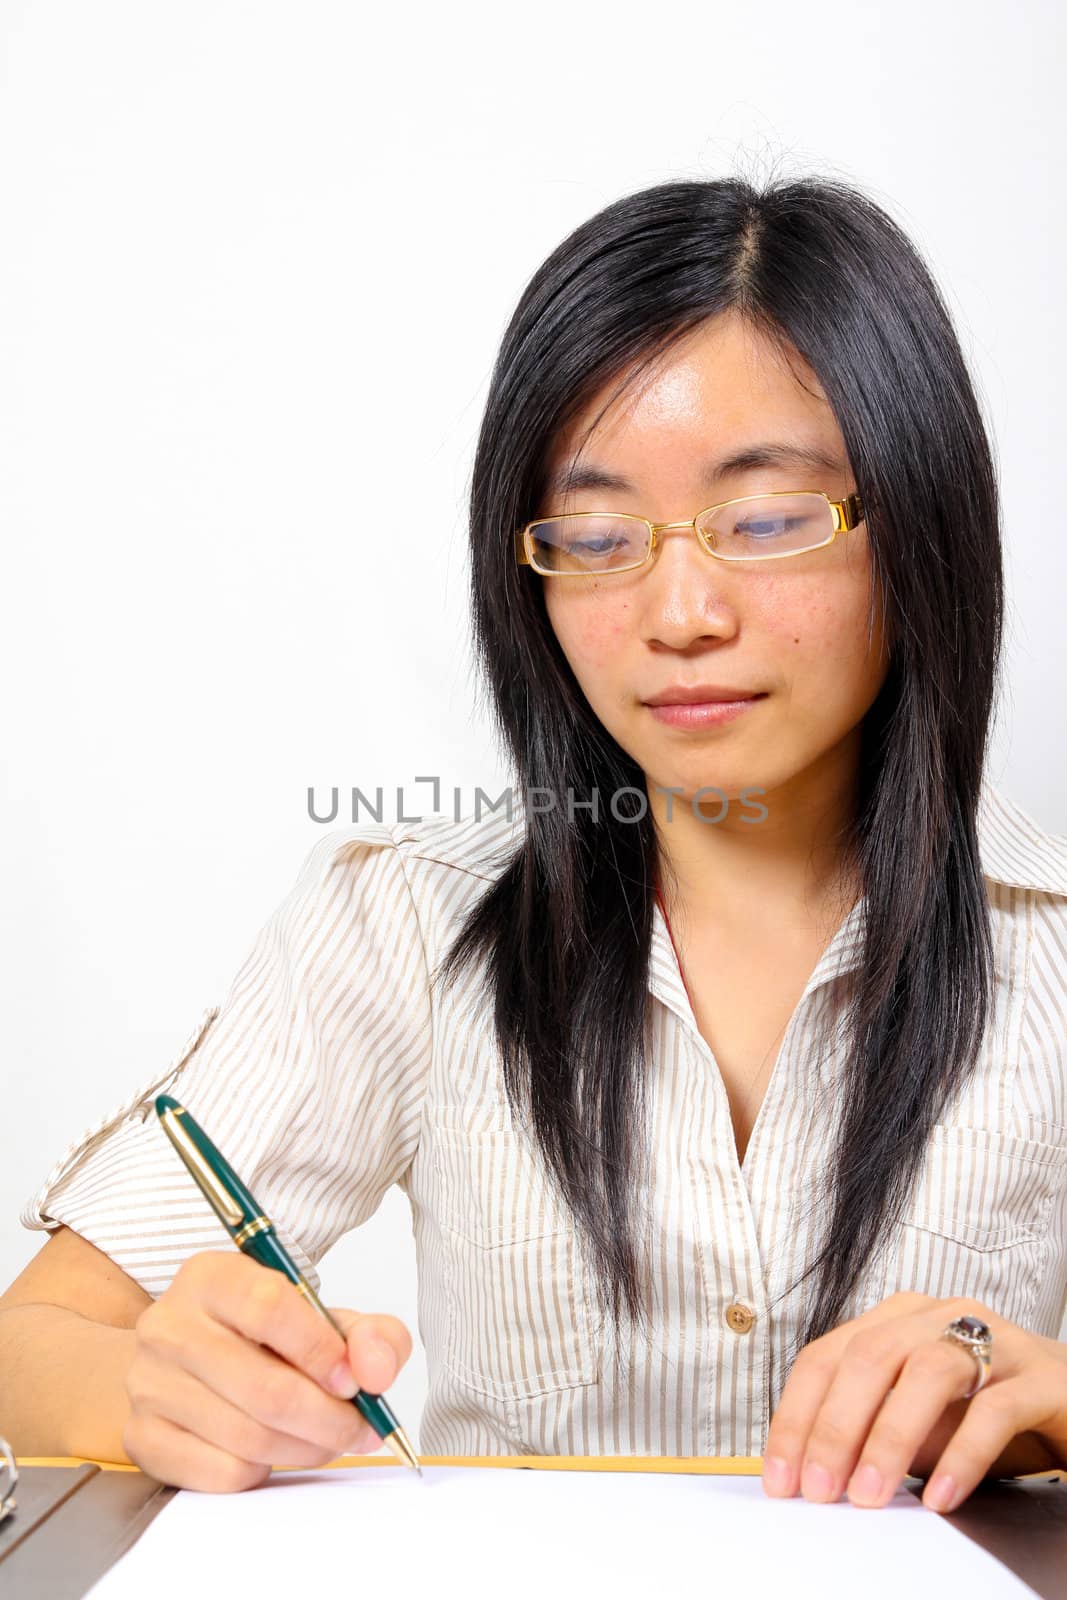 Chinese businesswoman, sitting at desk writing